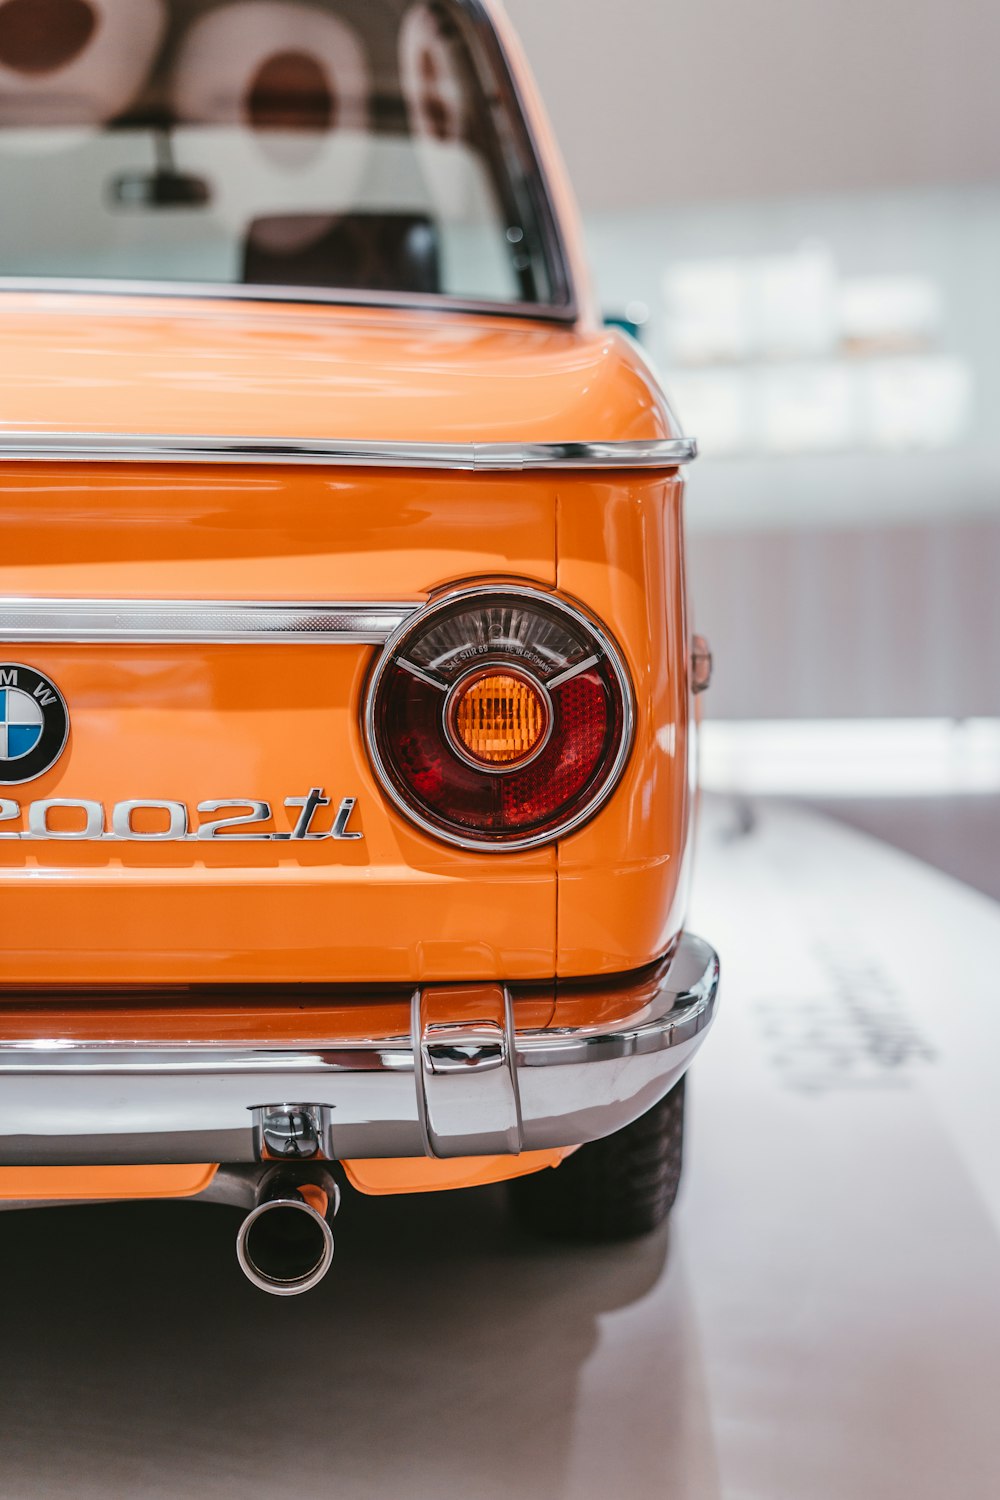 a close up of an orange bmw car